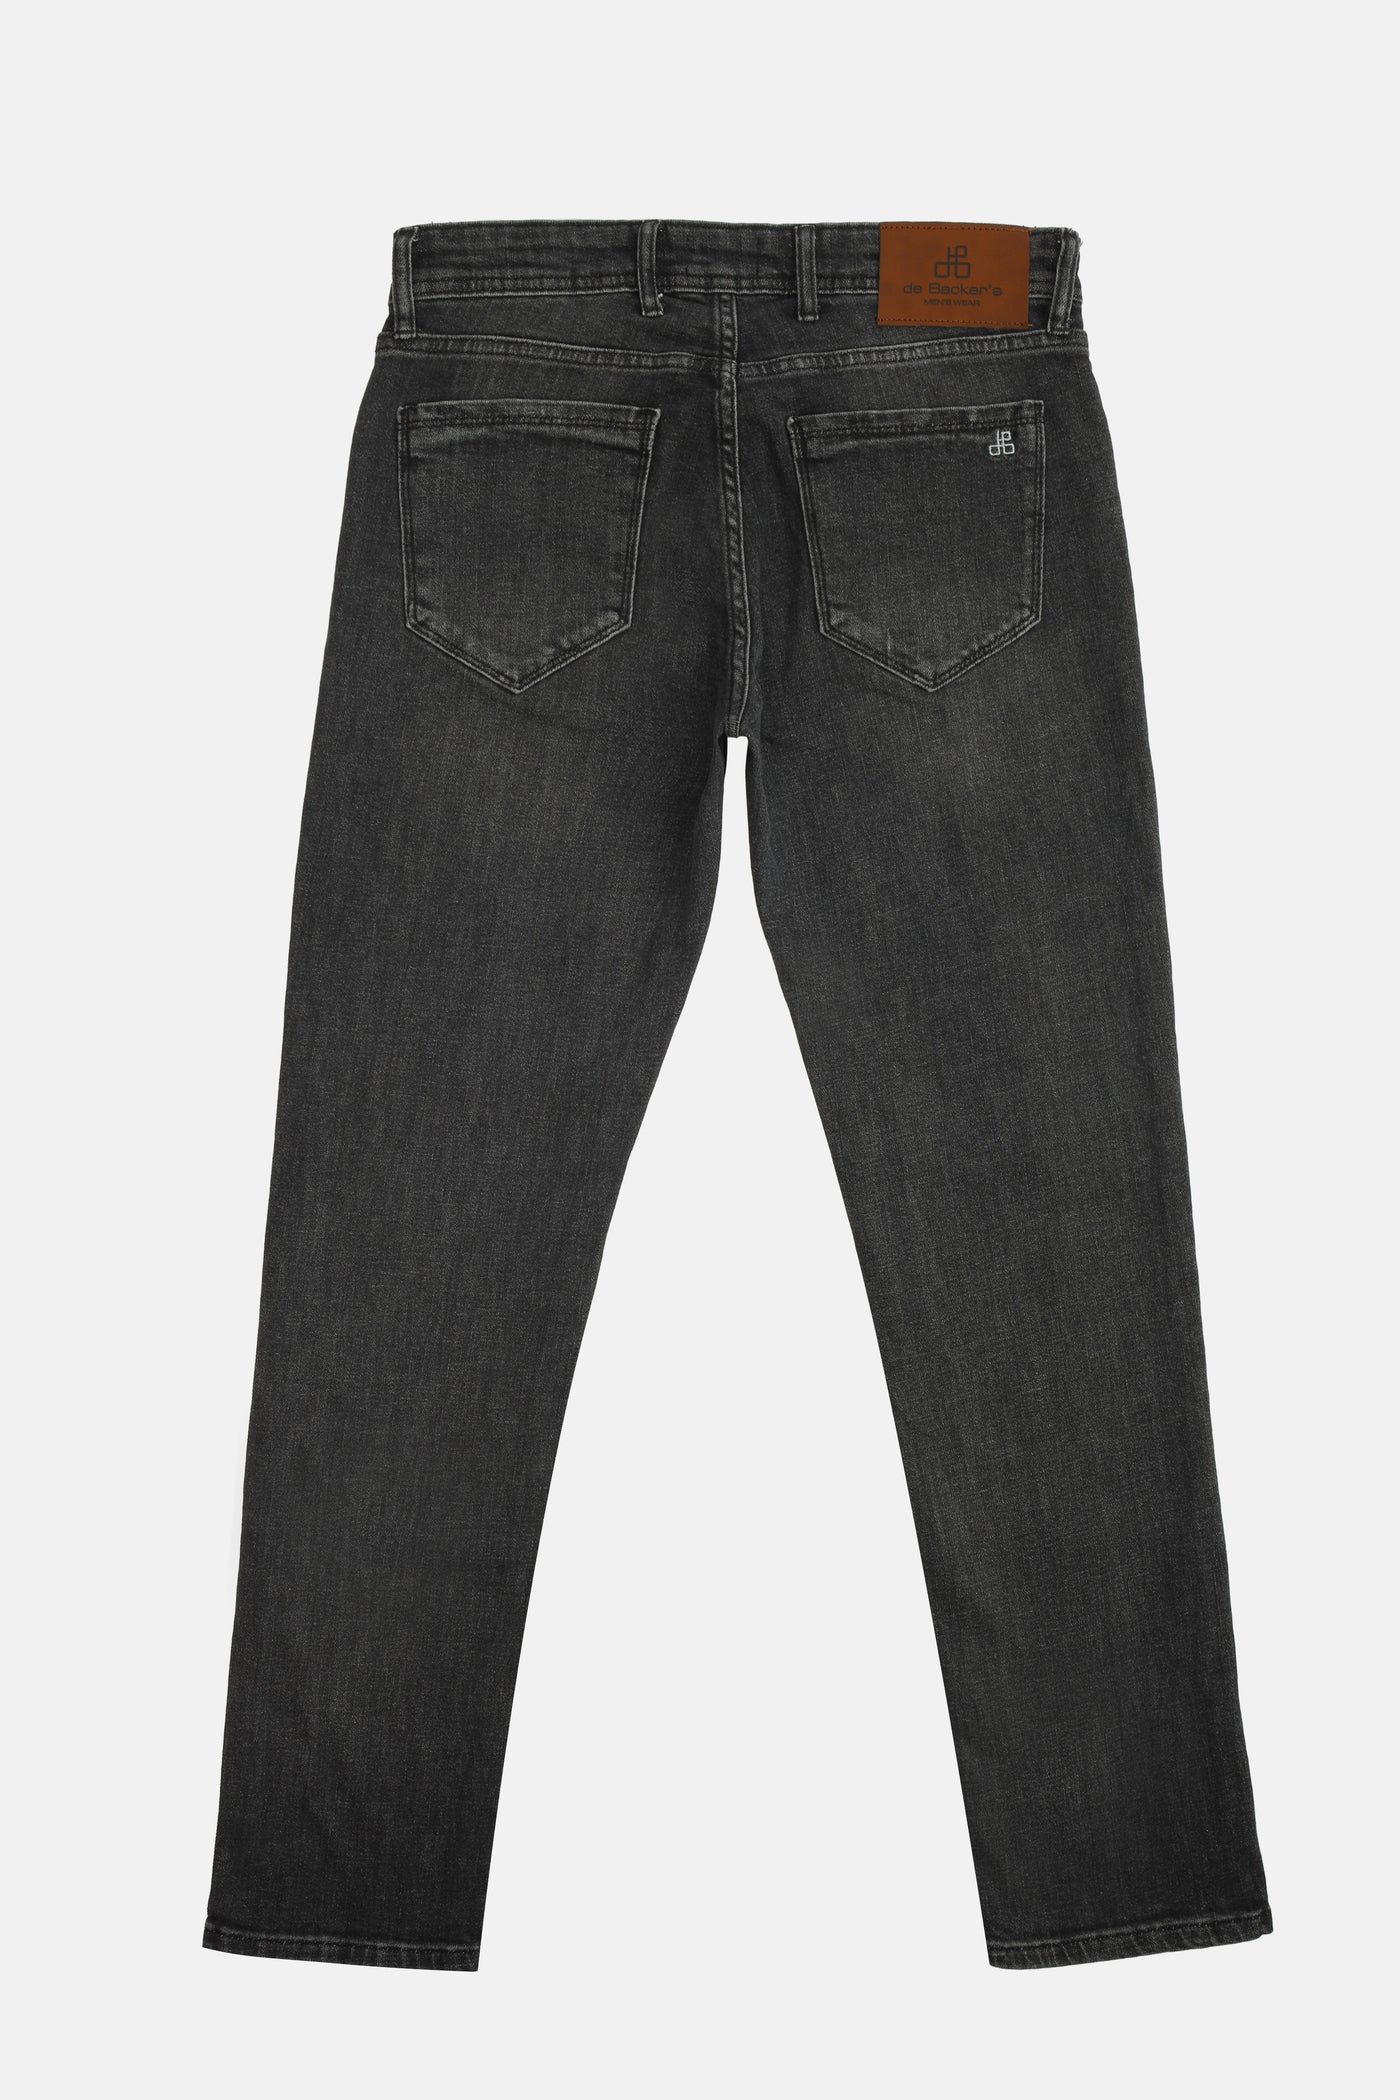 Solid Slim Black Gray Wash Jeans